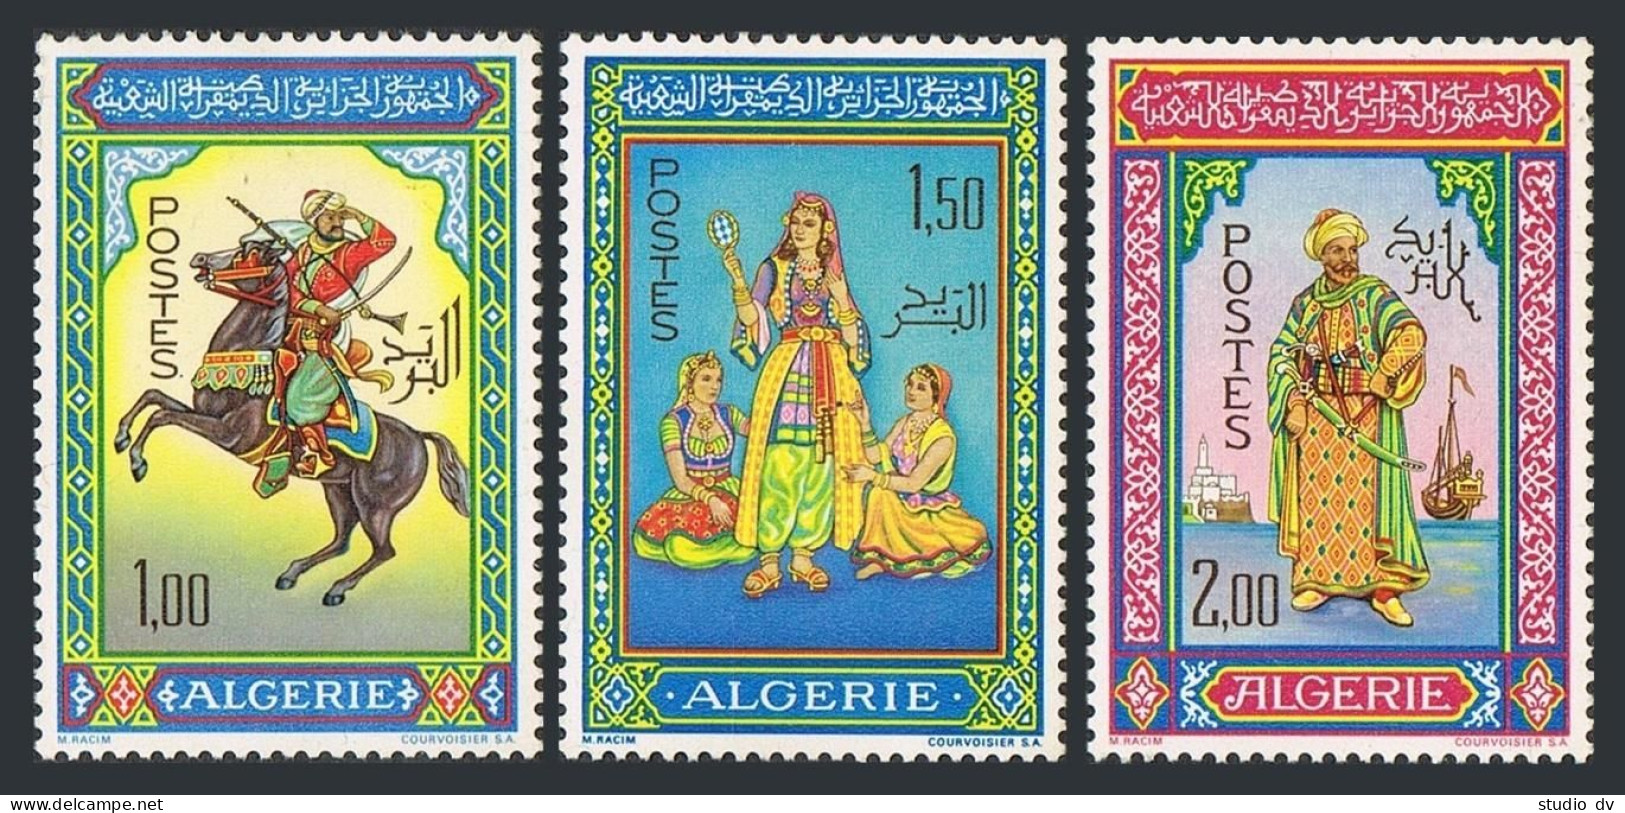 Algeria 362-364,MNH.Miniatures By Mohammed Rasim.Horseman,Pirate Barbarossa,1966 - Algerije (1962-...)